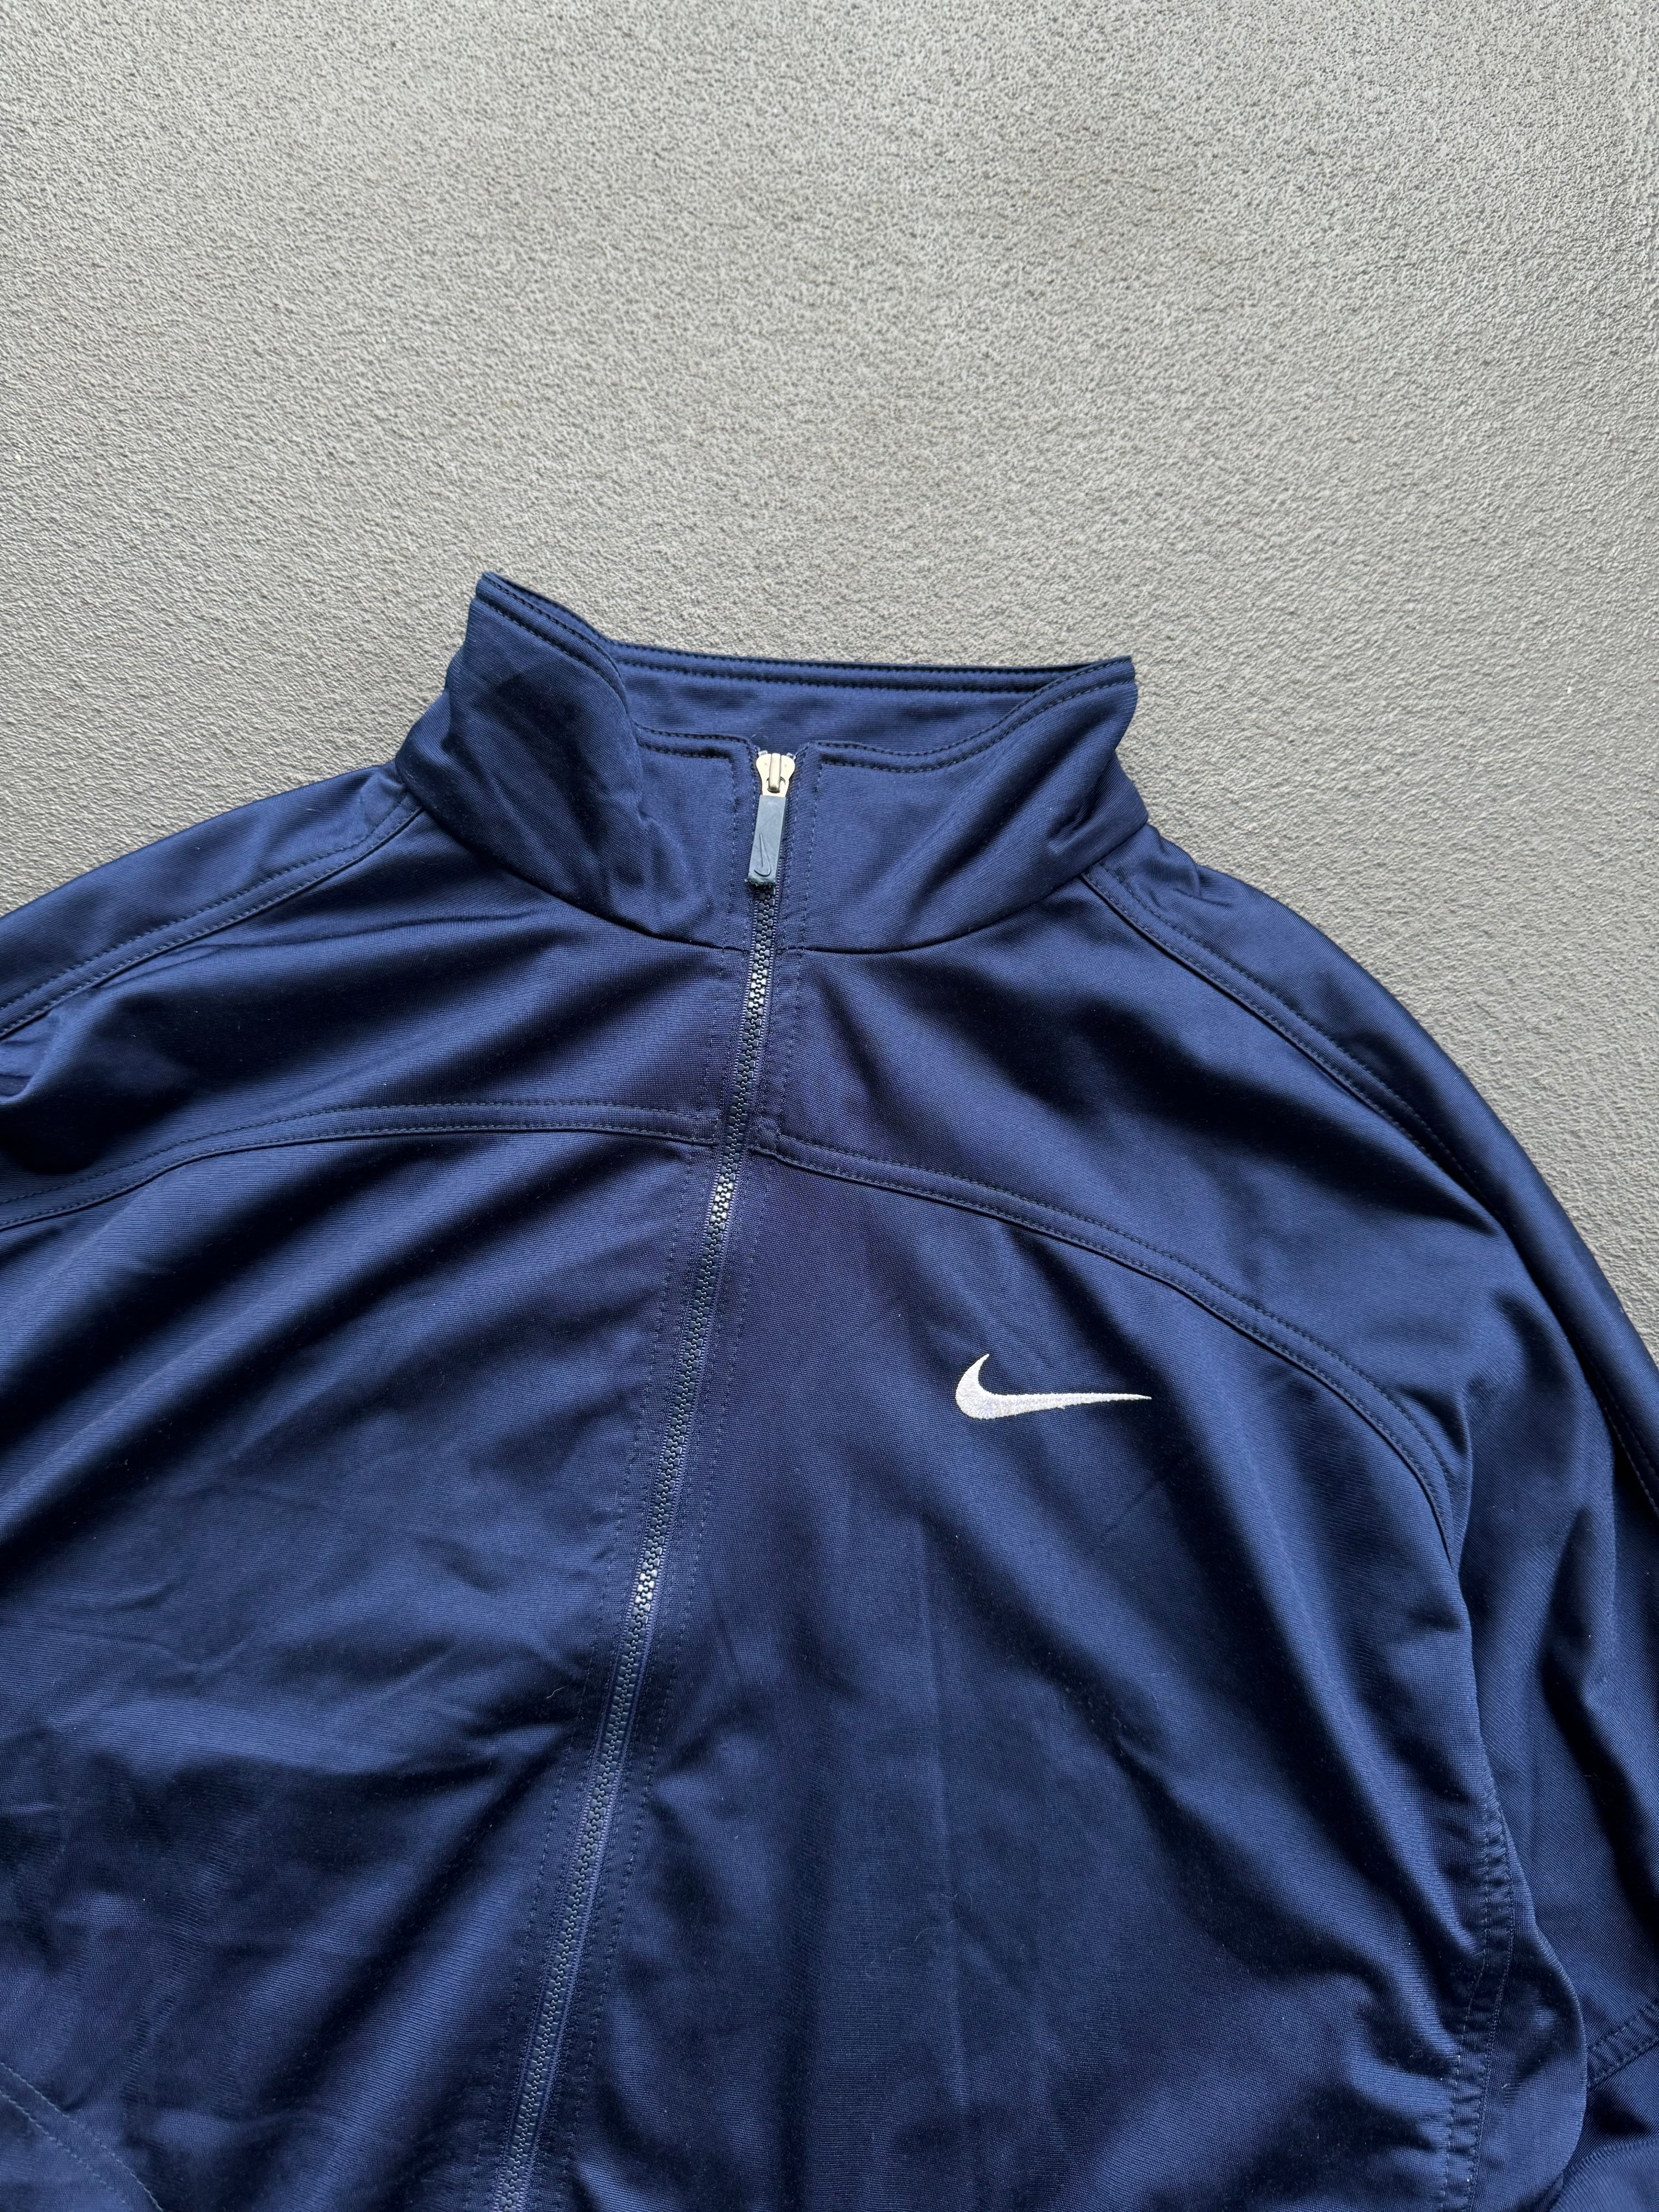 Vintage 90s Nike Swoosh Track Jacket (XL)